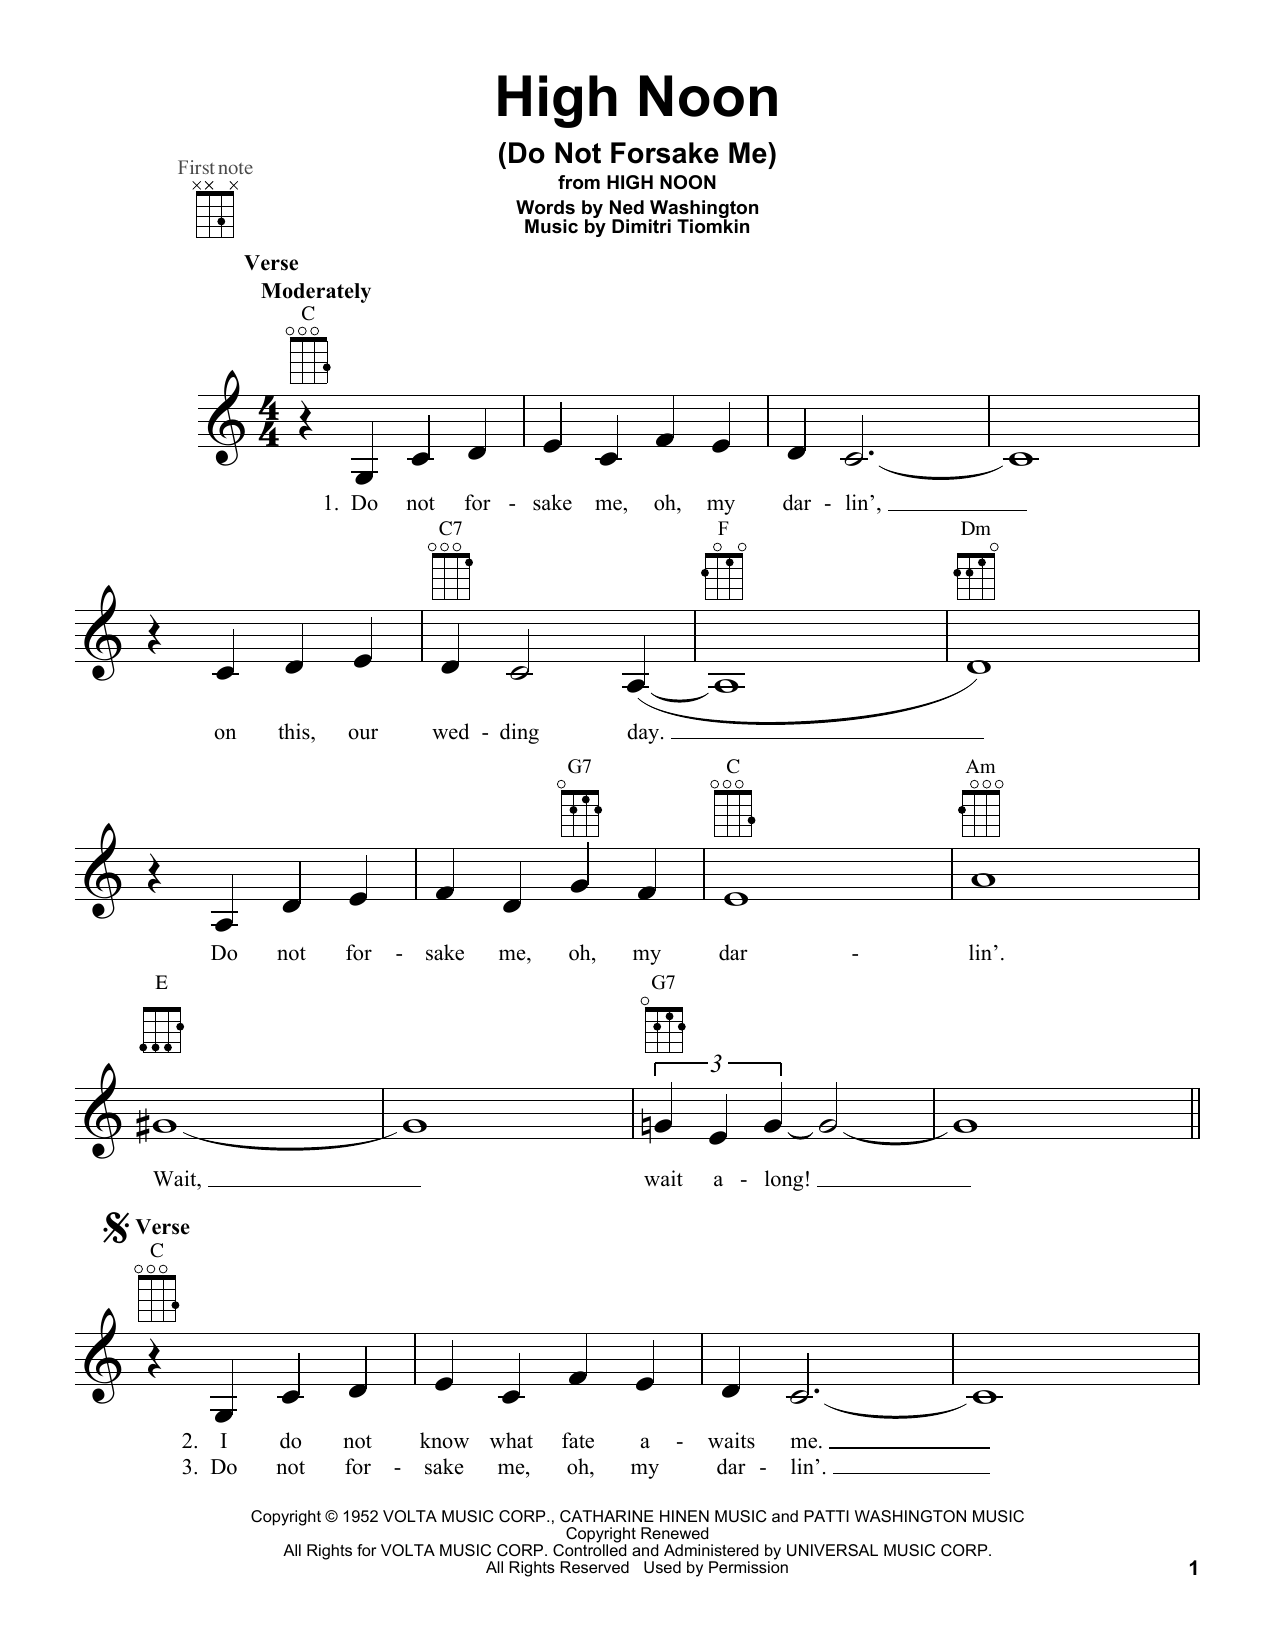 Ned Washington High Noon (Do Not Forsake Me) Sheet Music Notes & Chords for Ukulele - Download or Print PDF